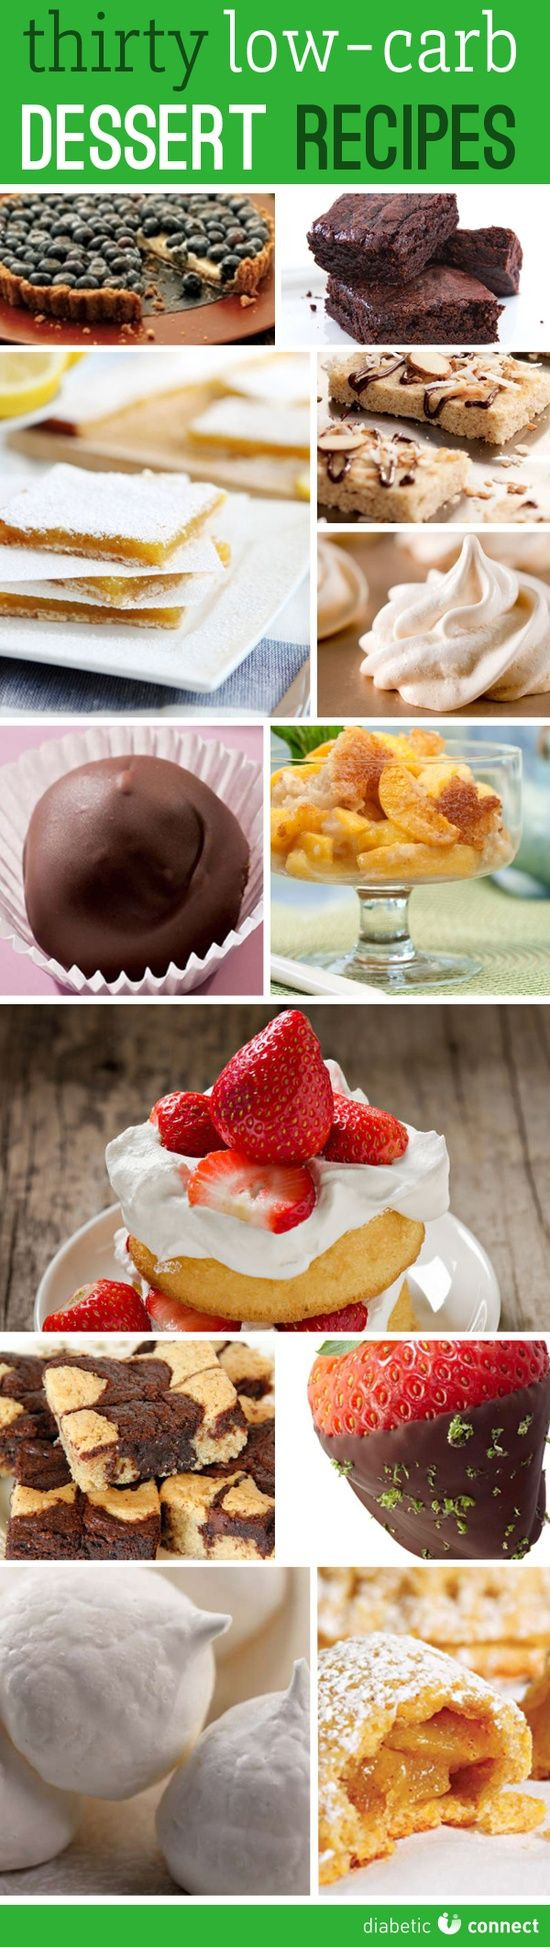 Low Carb Desserts For Diabetics
 32 best images about Diabetes Friendly Desserts on